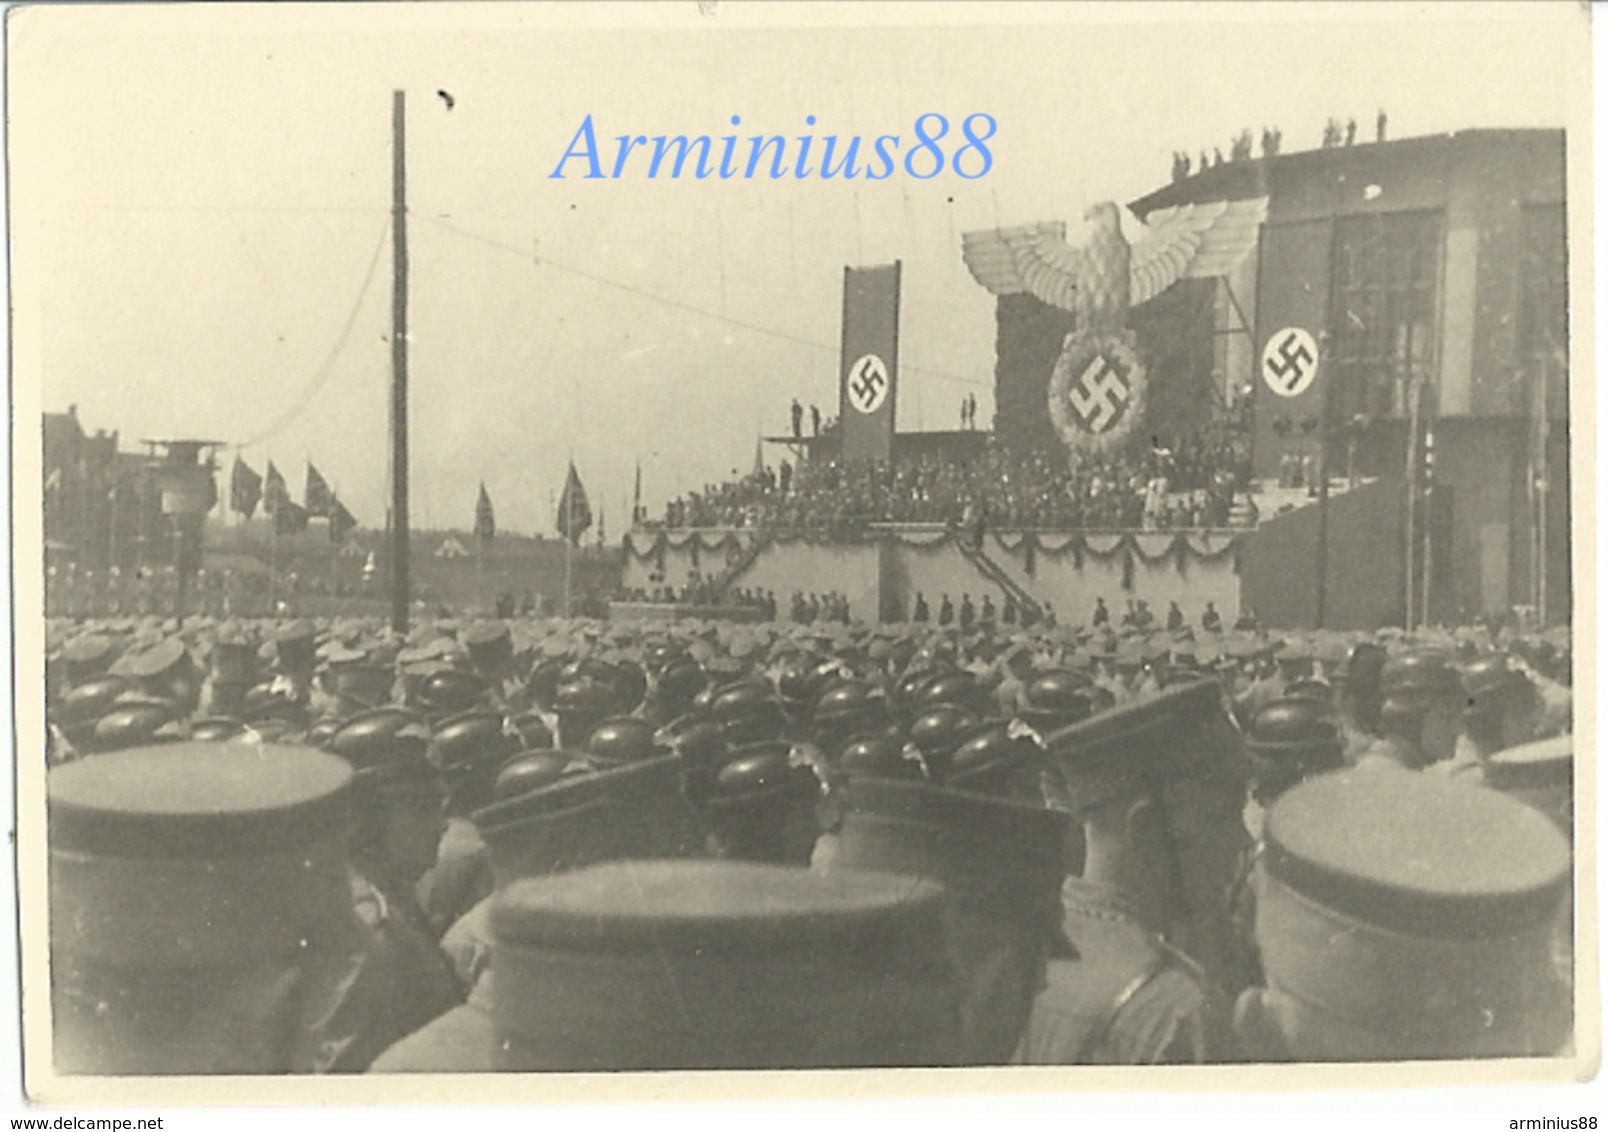 NSDAP - Treffen - Sturmabteilung (SA) - Nationalsozialistisches Kraftfahrkorps (NSKK) - Politische Leiter - Hoheitsadler - Krieg, Militär